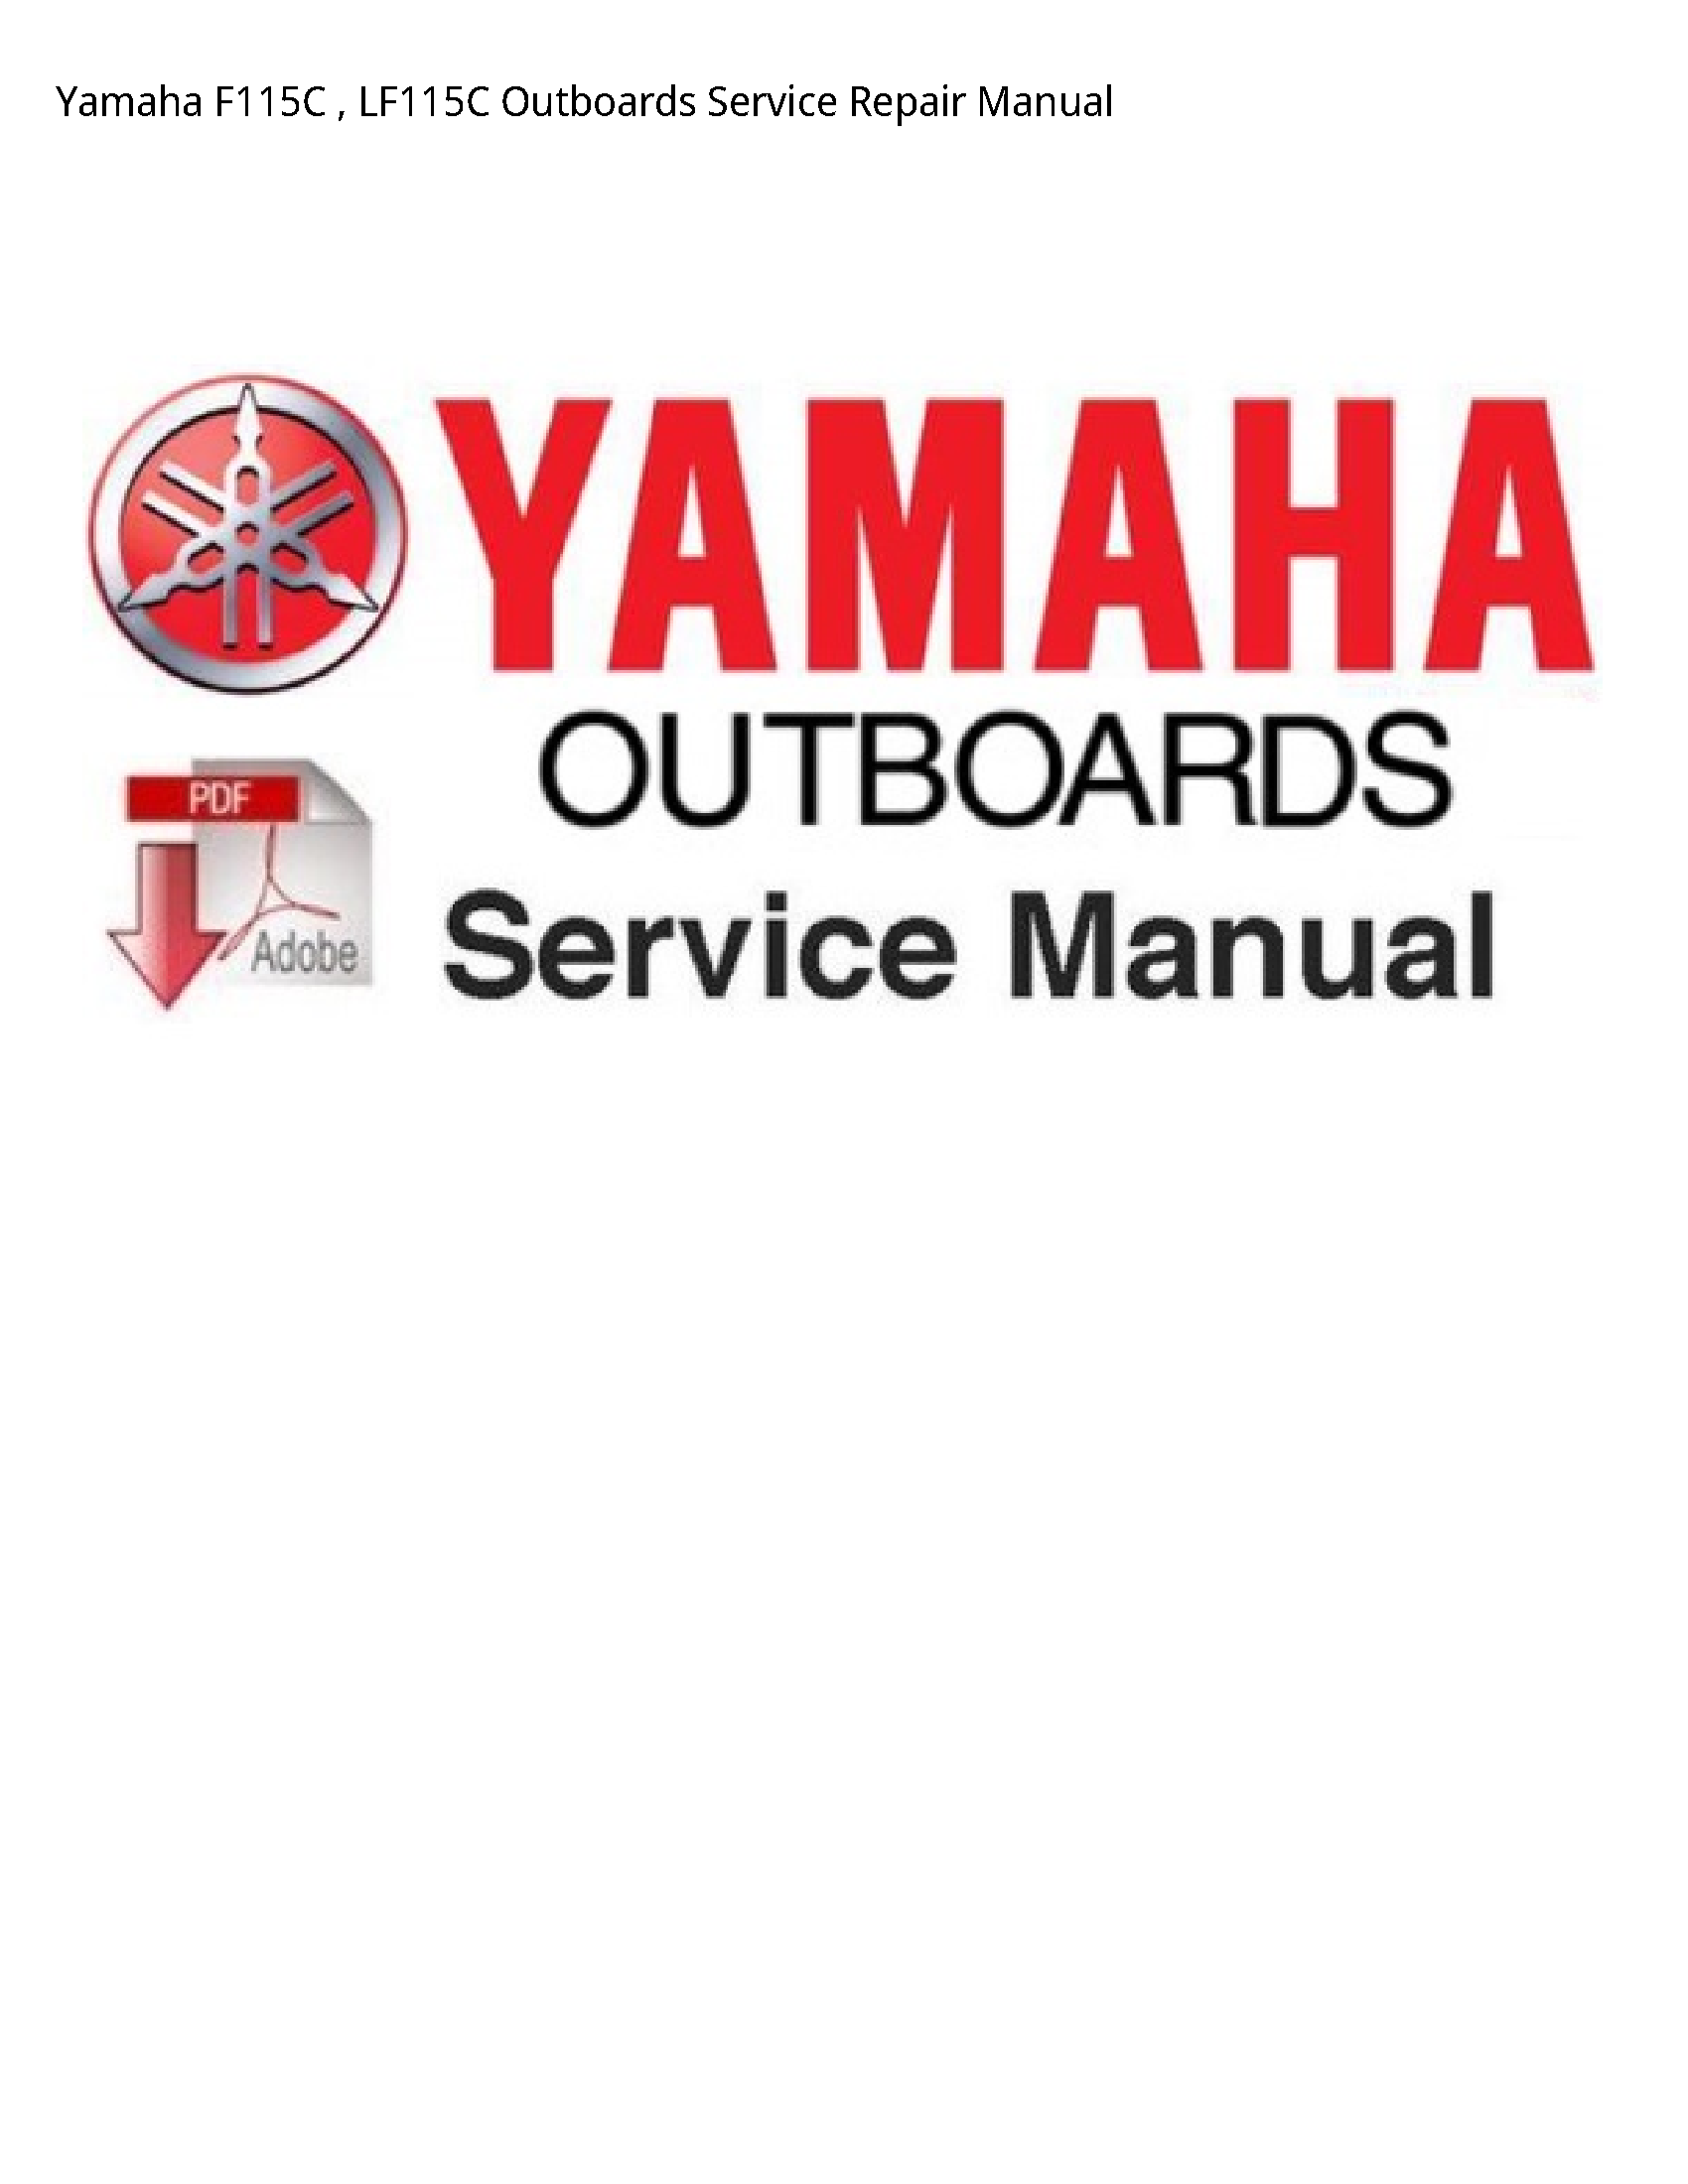 Yamaha F115C Outboards manual